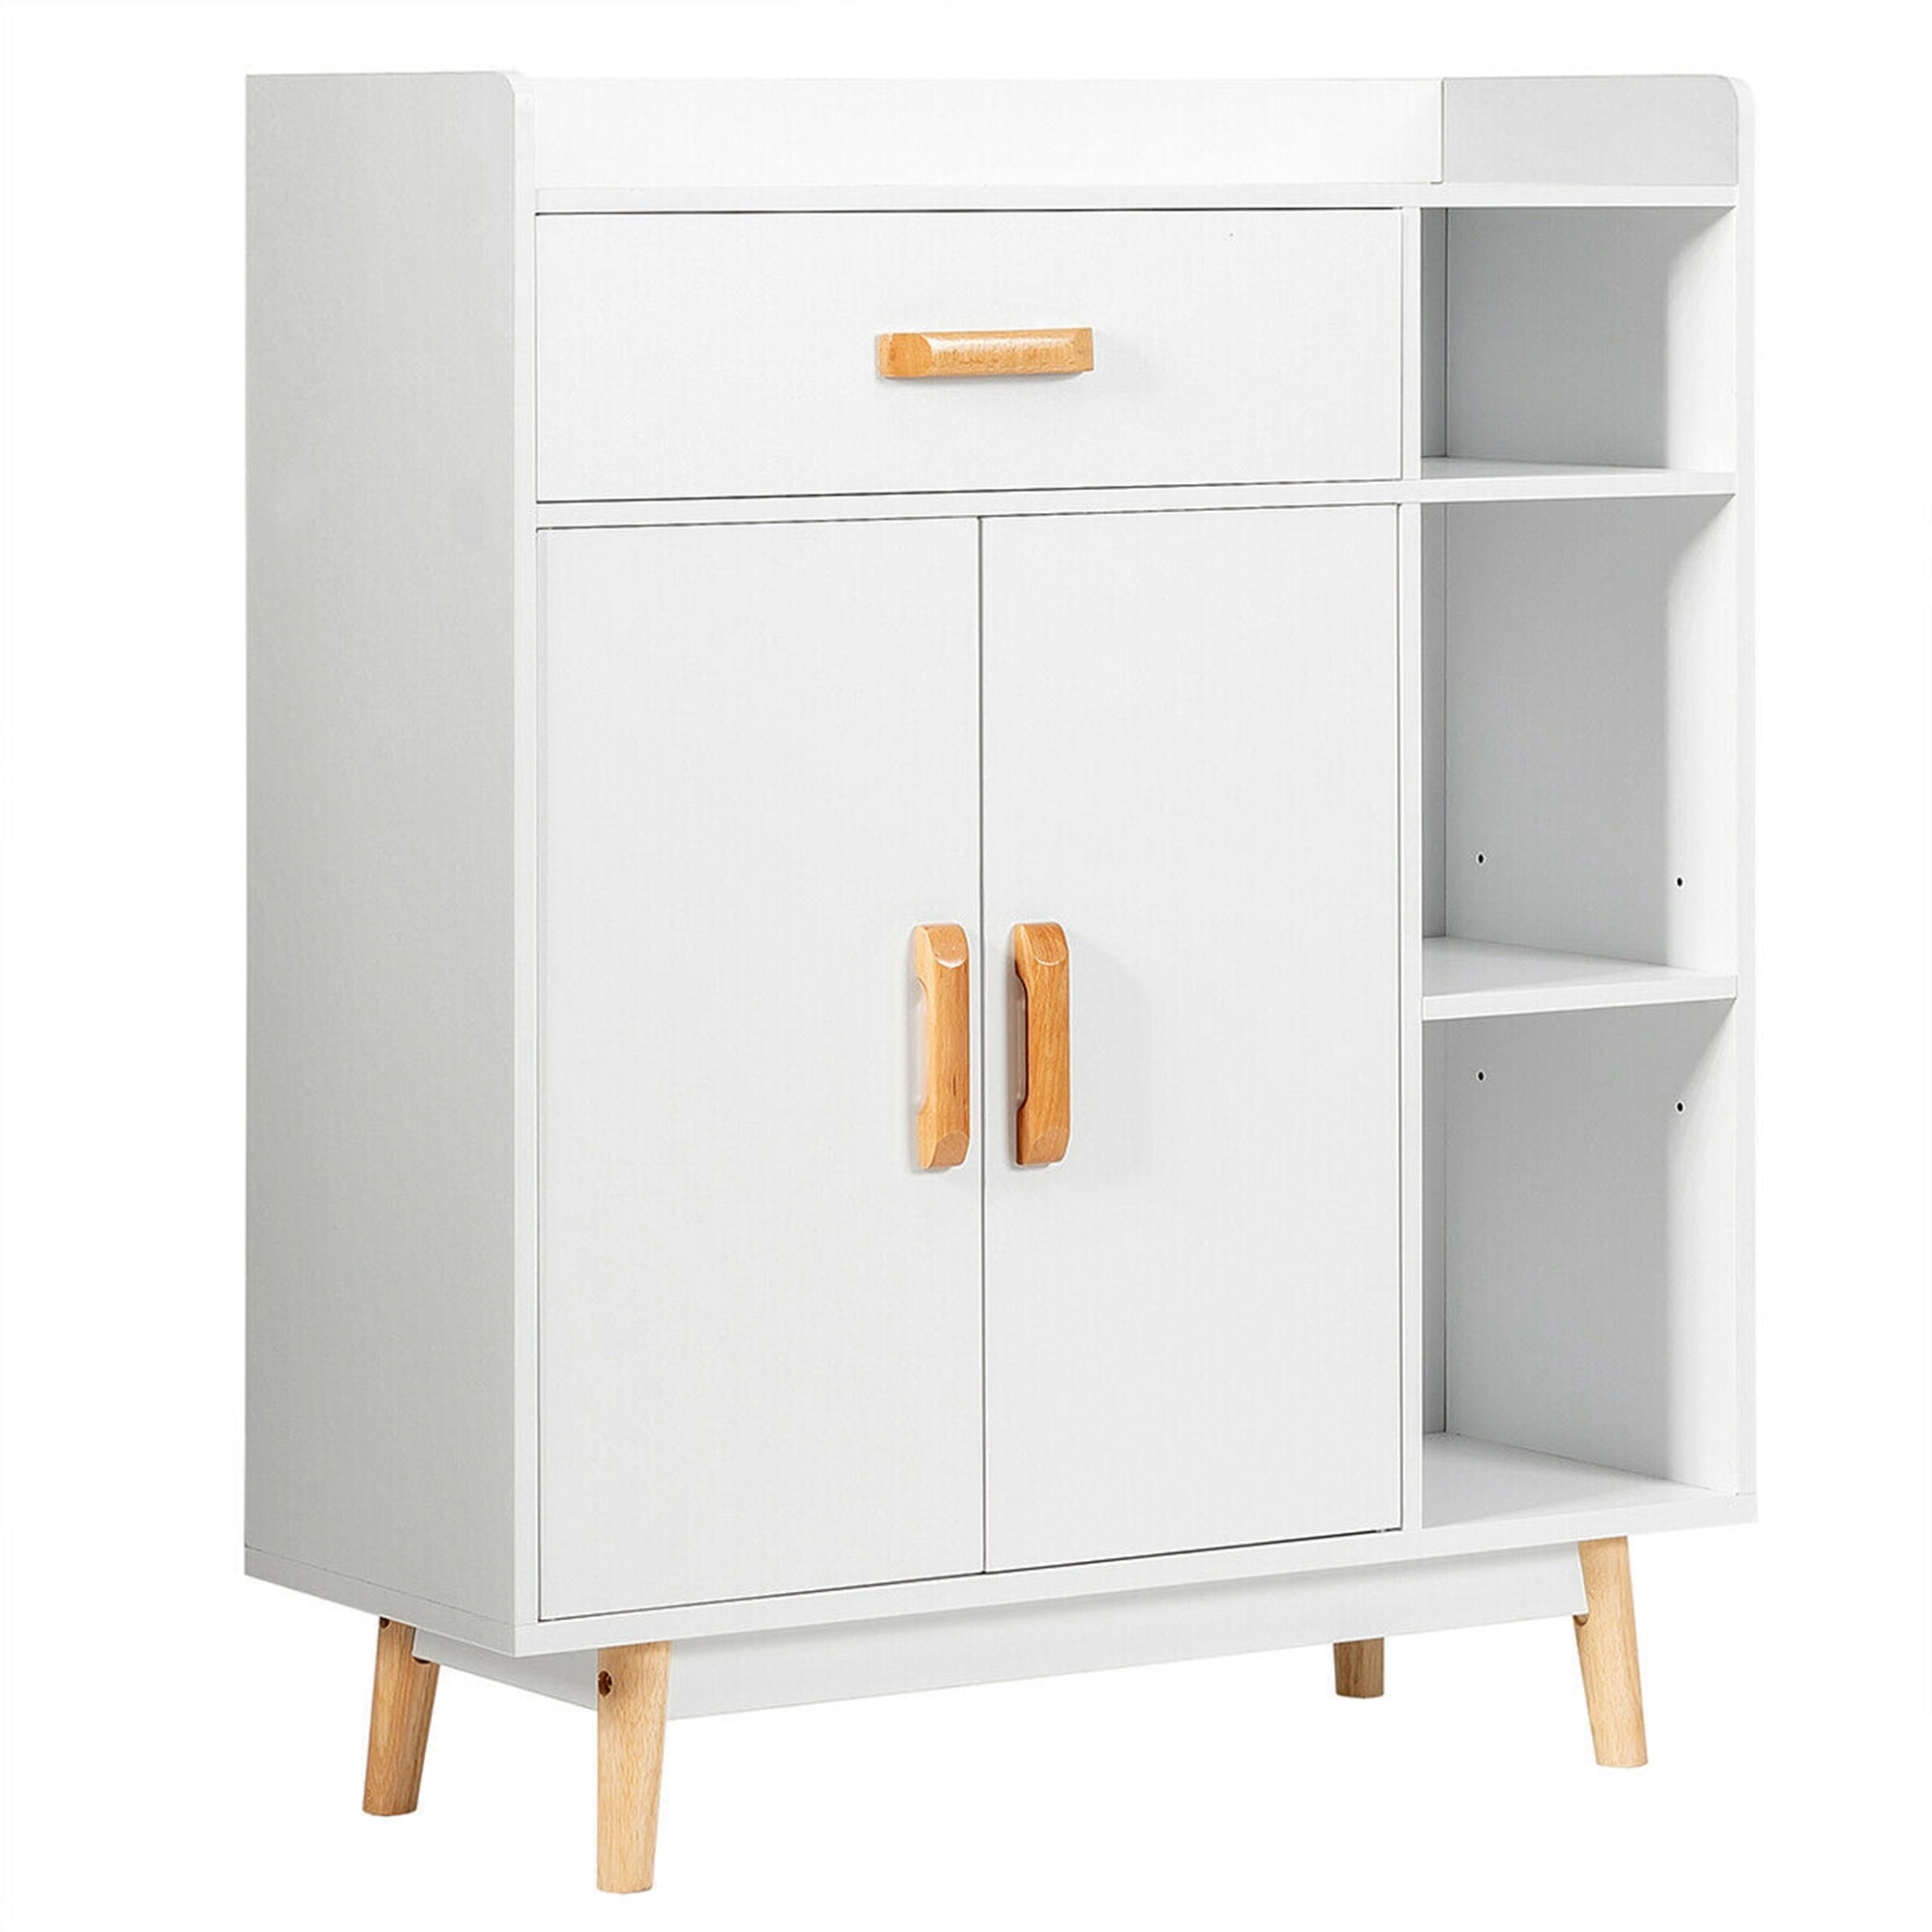 Gymax Floor Storage Cabinet Free Standing Cupboard Chest w/1 Drawer 2 